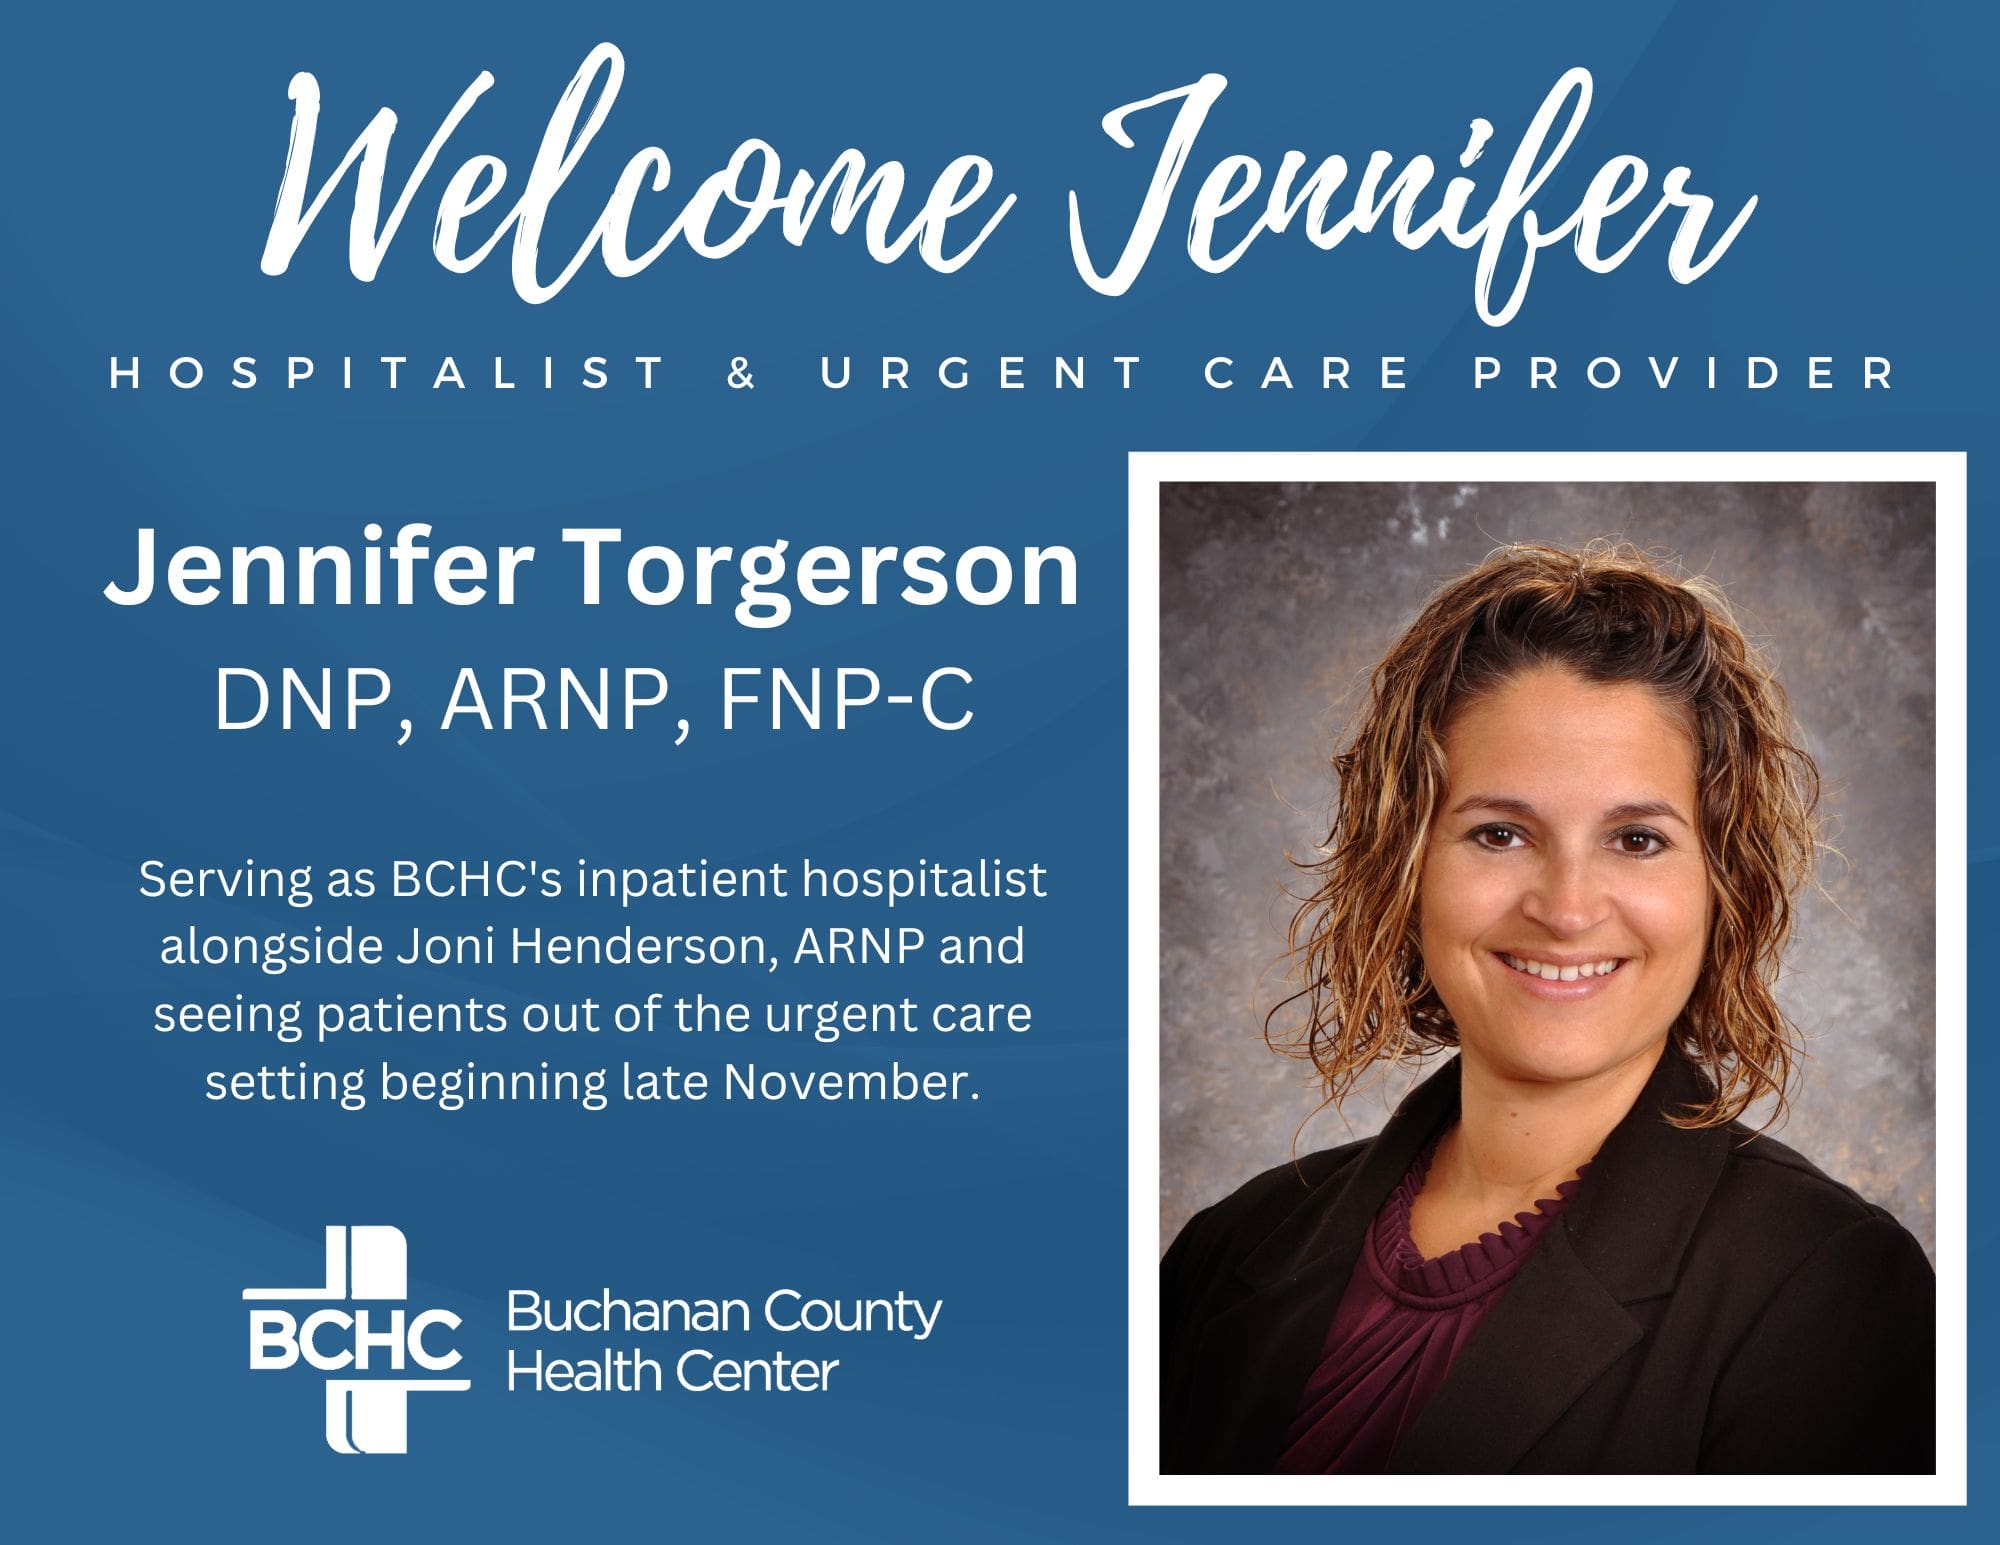 Jennifer Torgerson, DNP, ARNP, FNP-C Joining BCHC as Inpatient Hospitalist & Urgent Care Provider